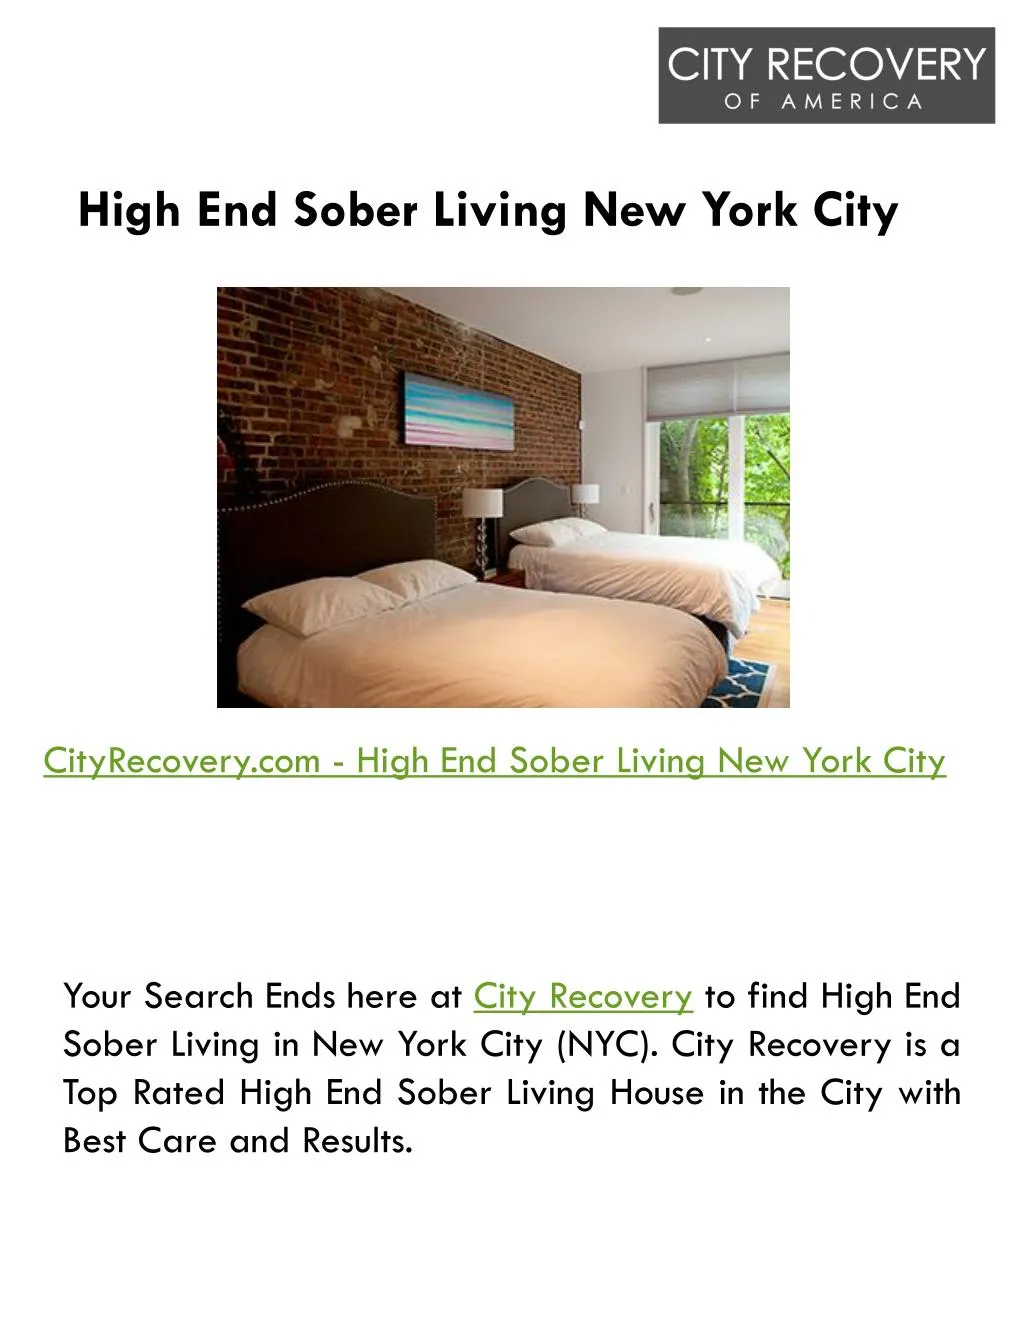 high end sober living new york city